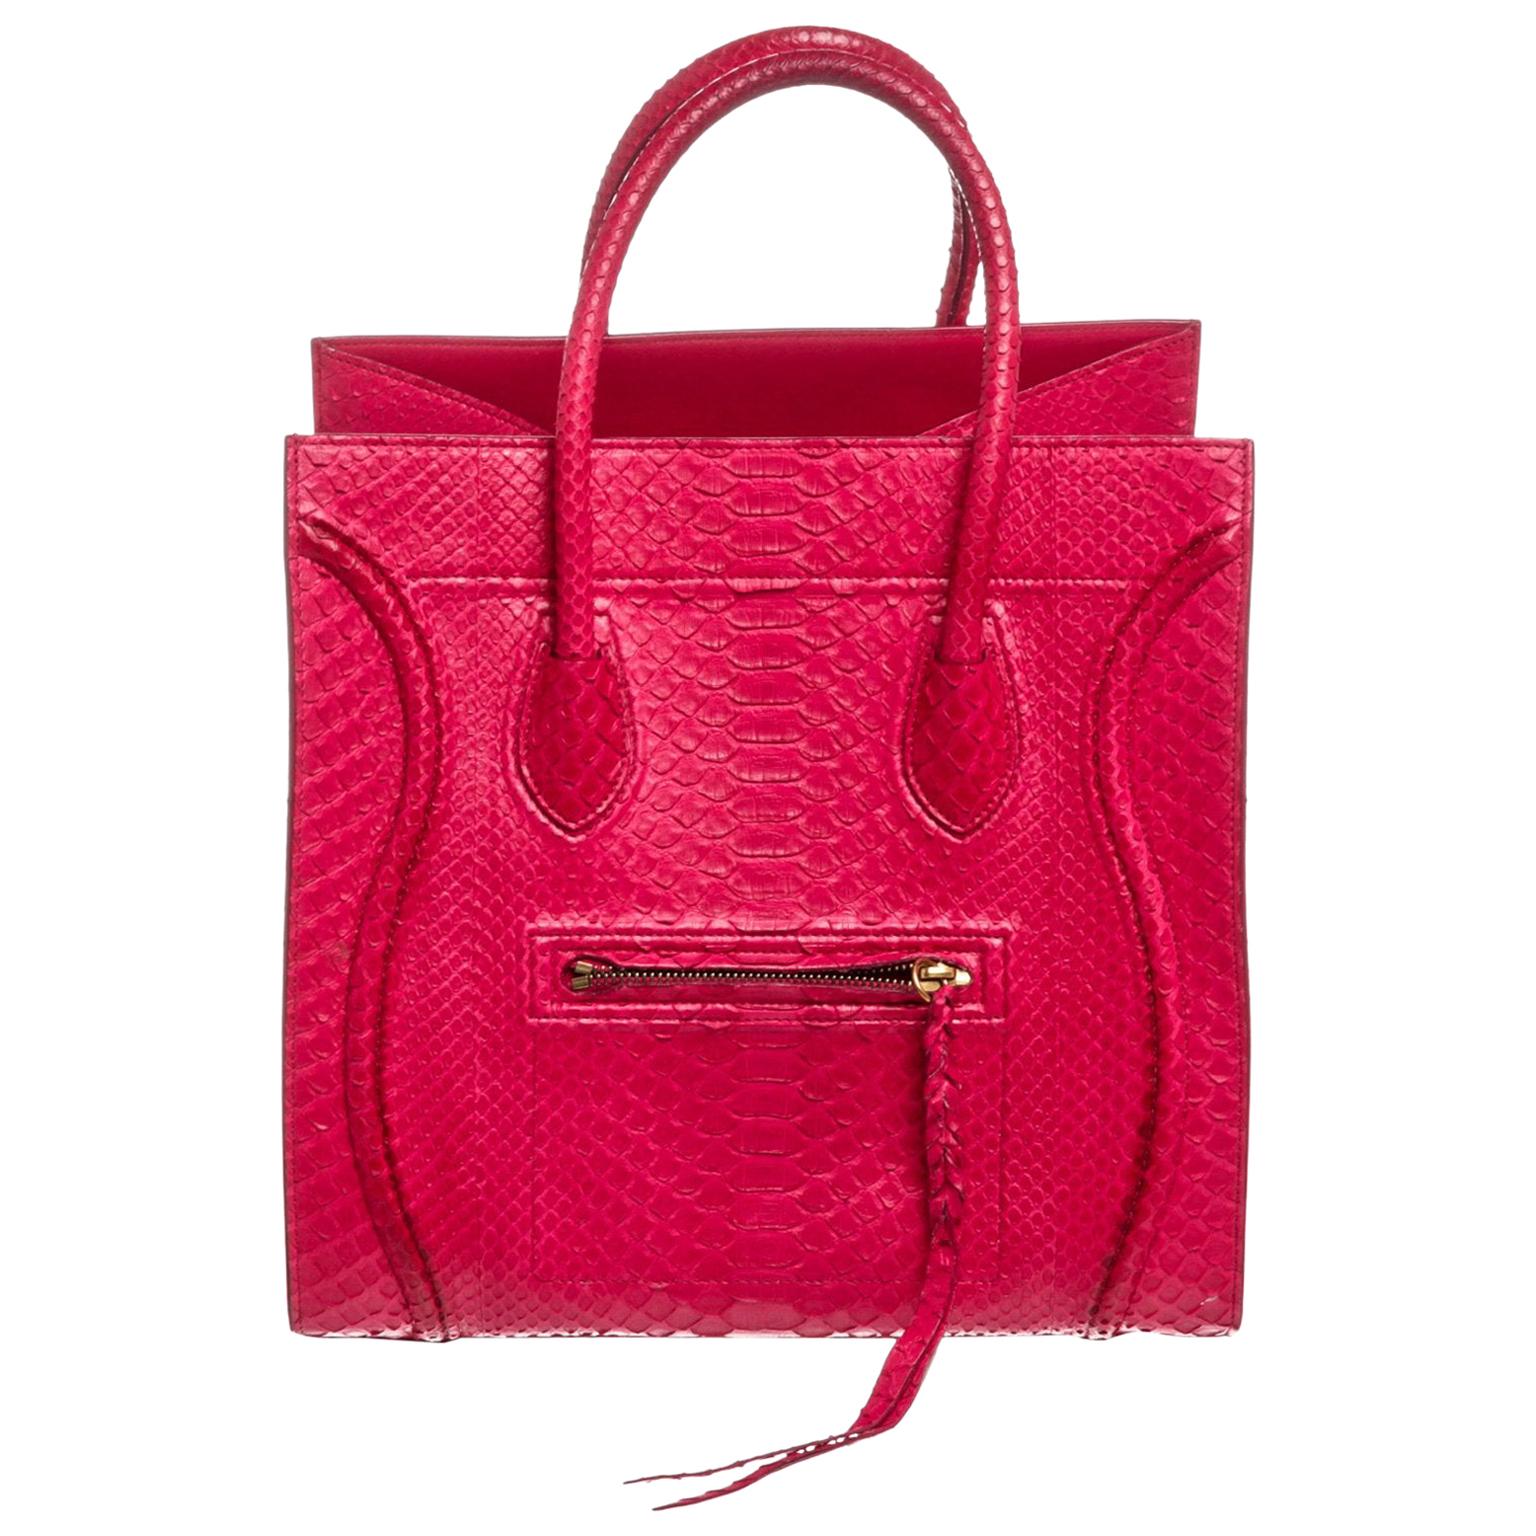 Celine Pink Python Medium Phantom Luggage Tote Bag